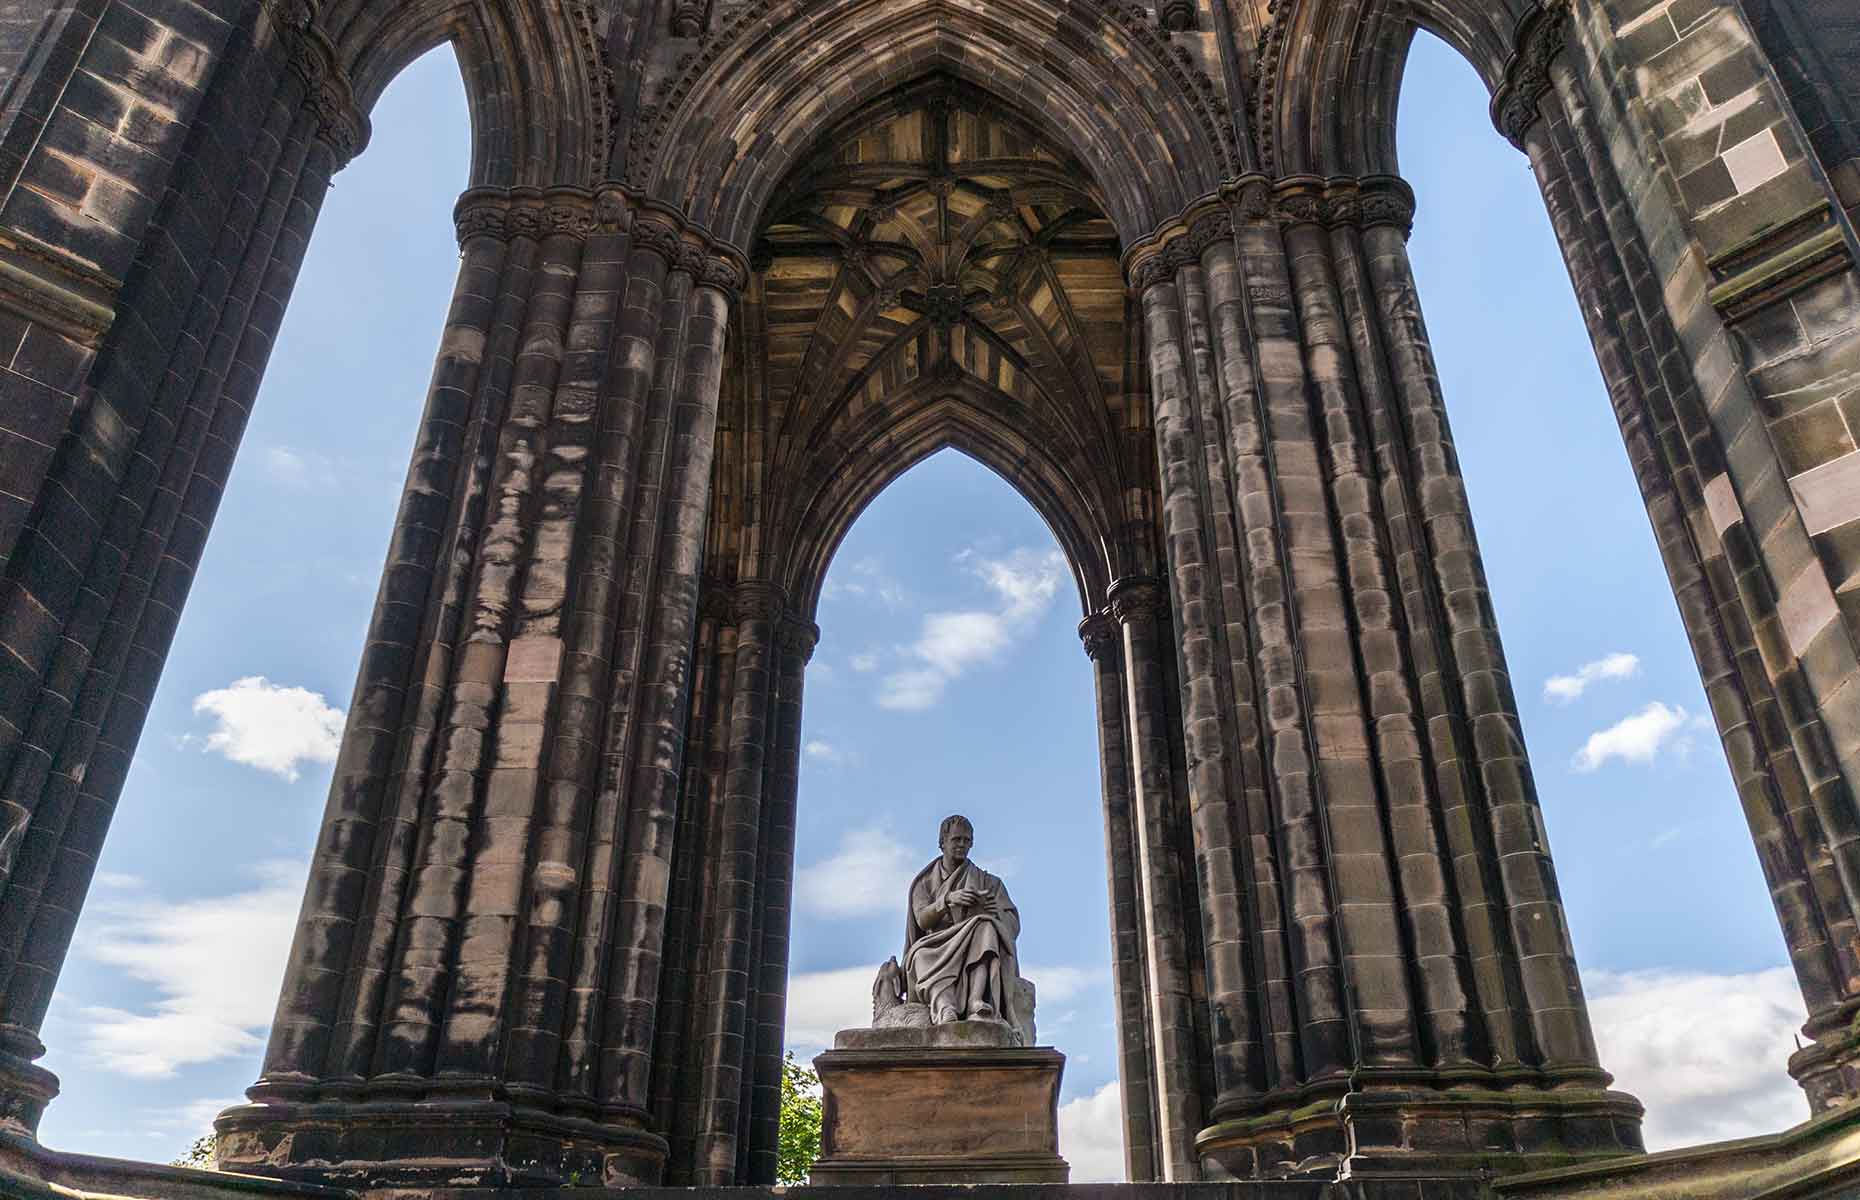 Sir Walter Scott statue (Image: Claudine Van Massenhove/Shutterstock)